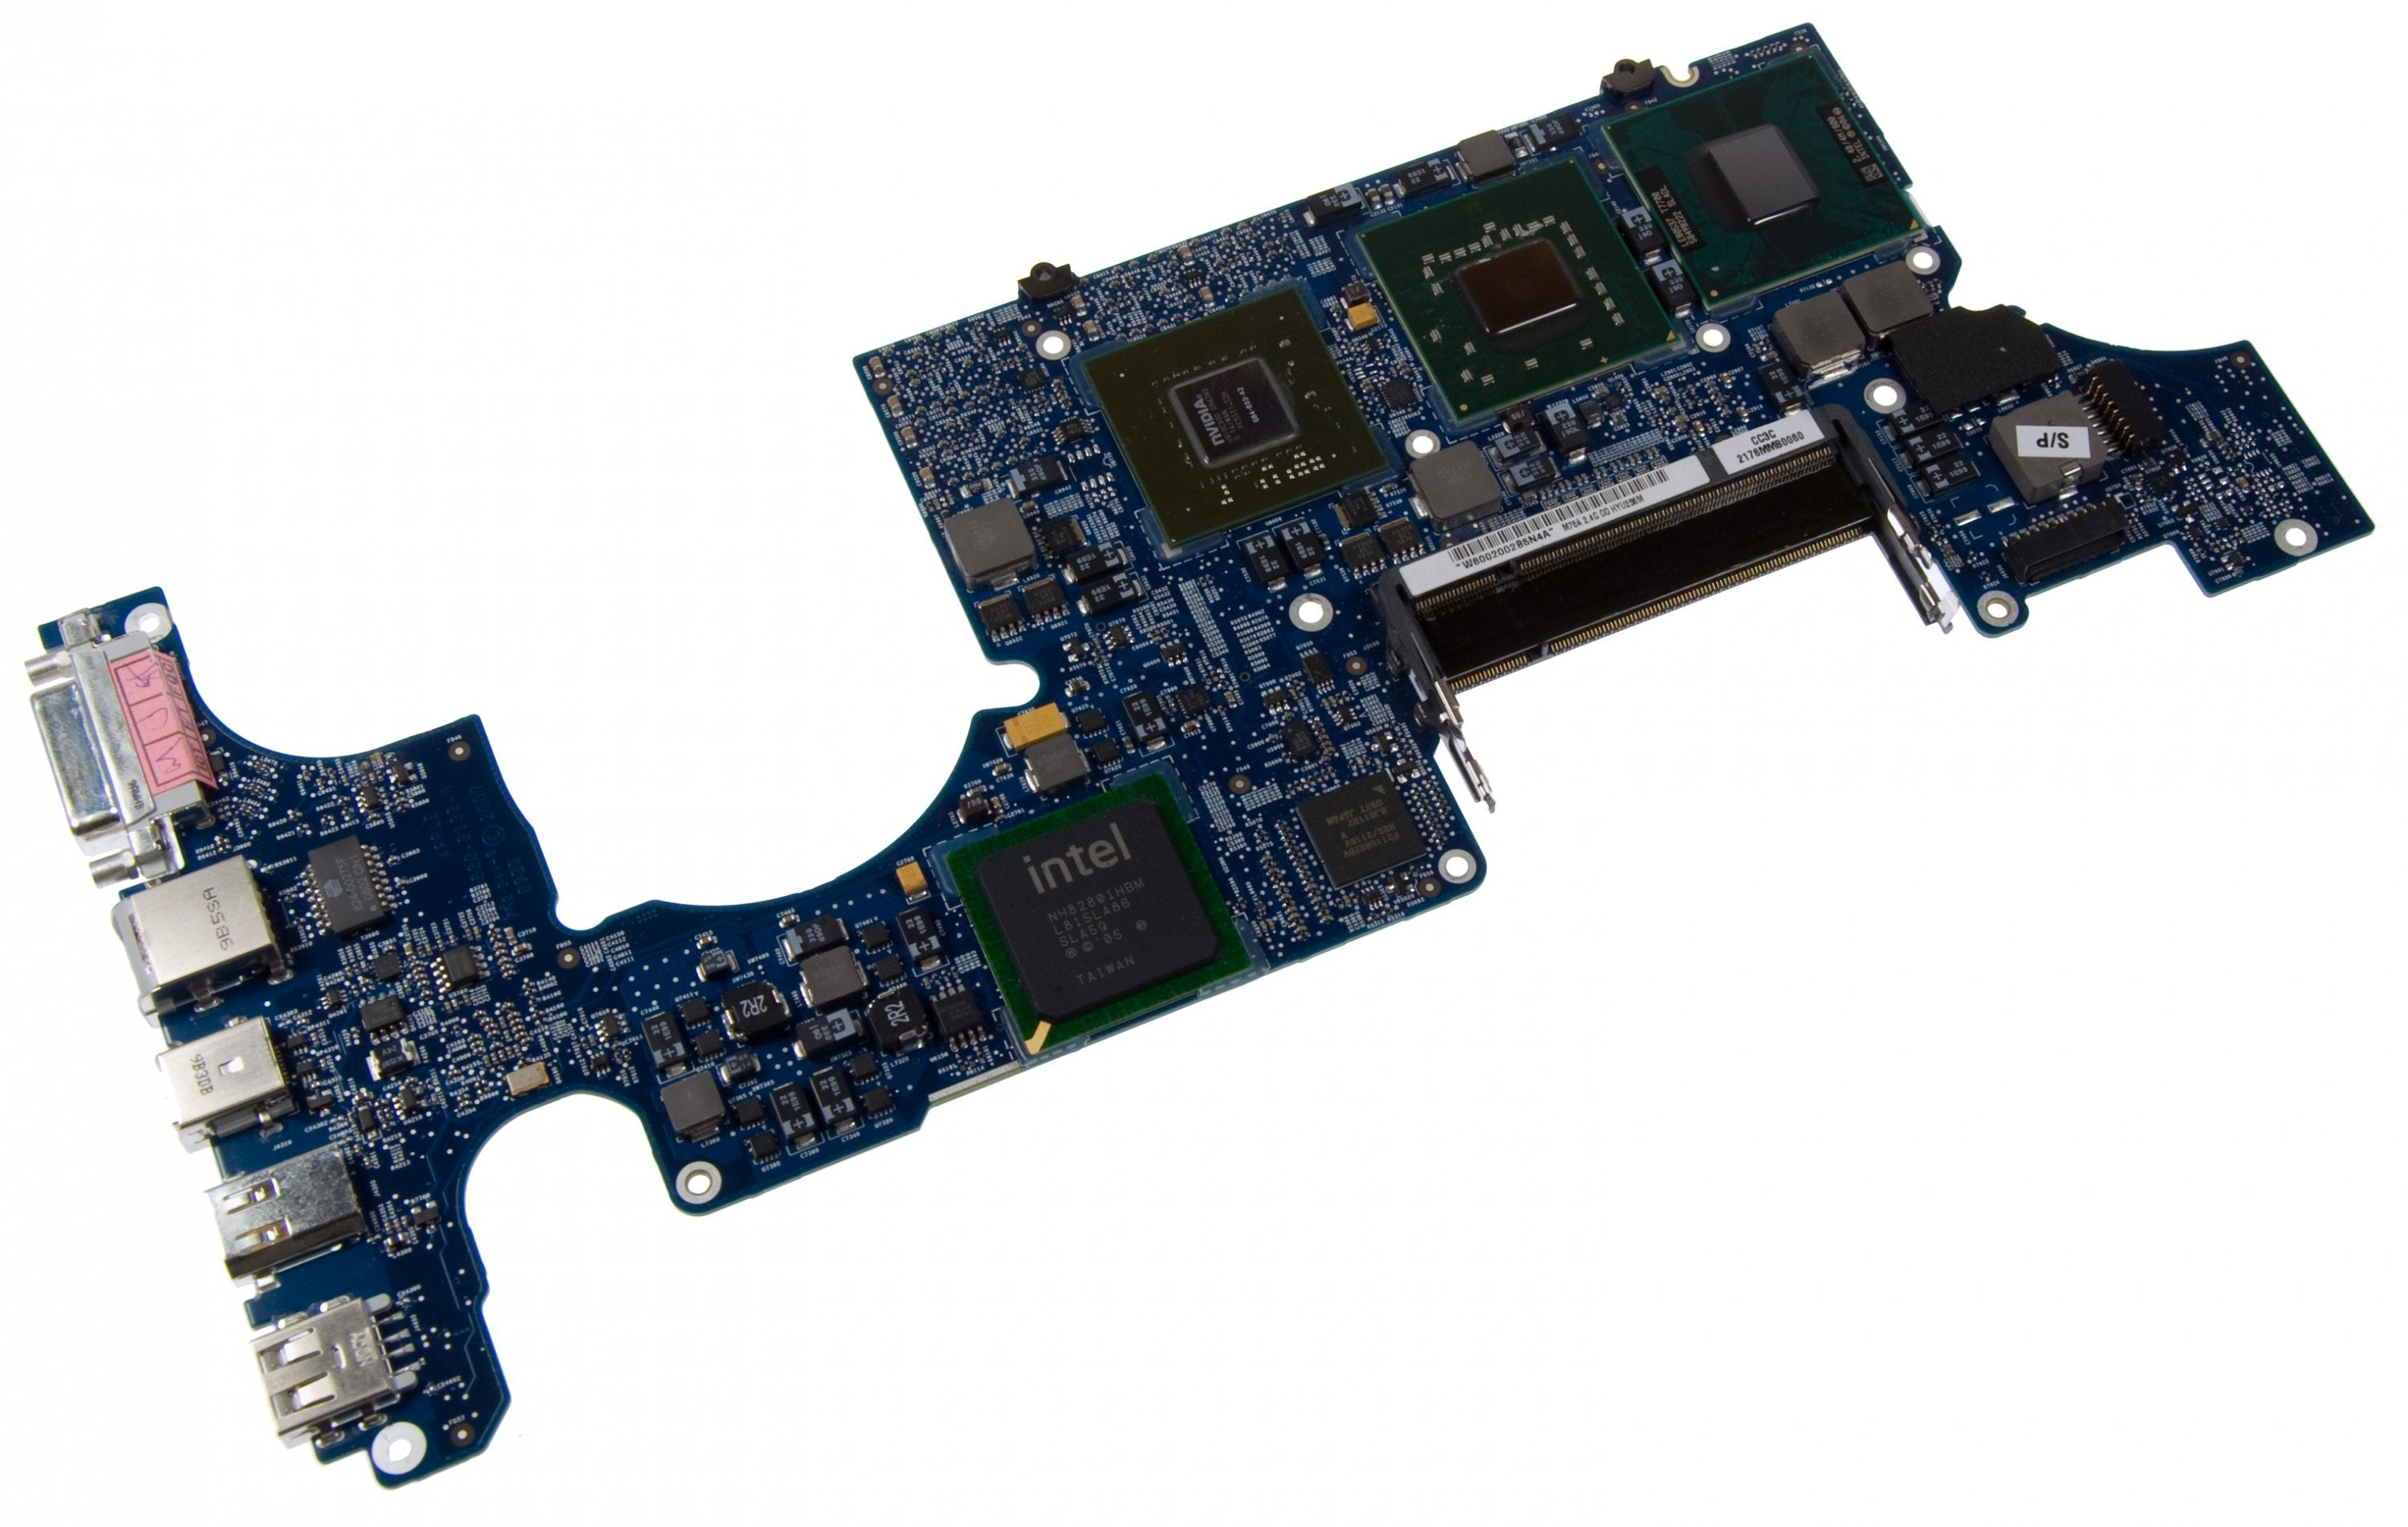 MacBook Pro 17" (Model A1229) 2.4 GHz Logic Board